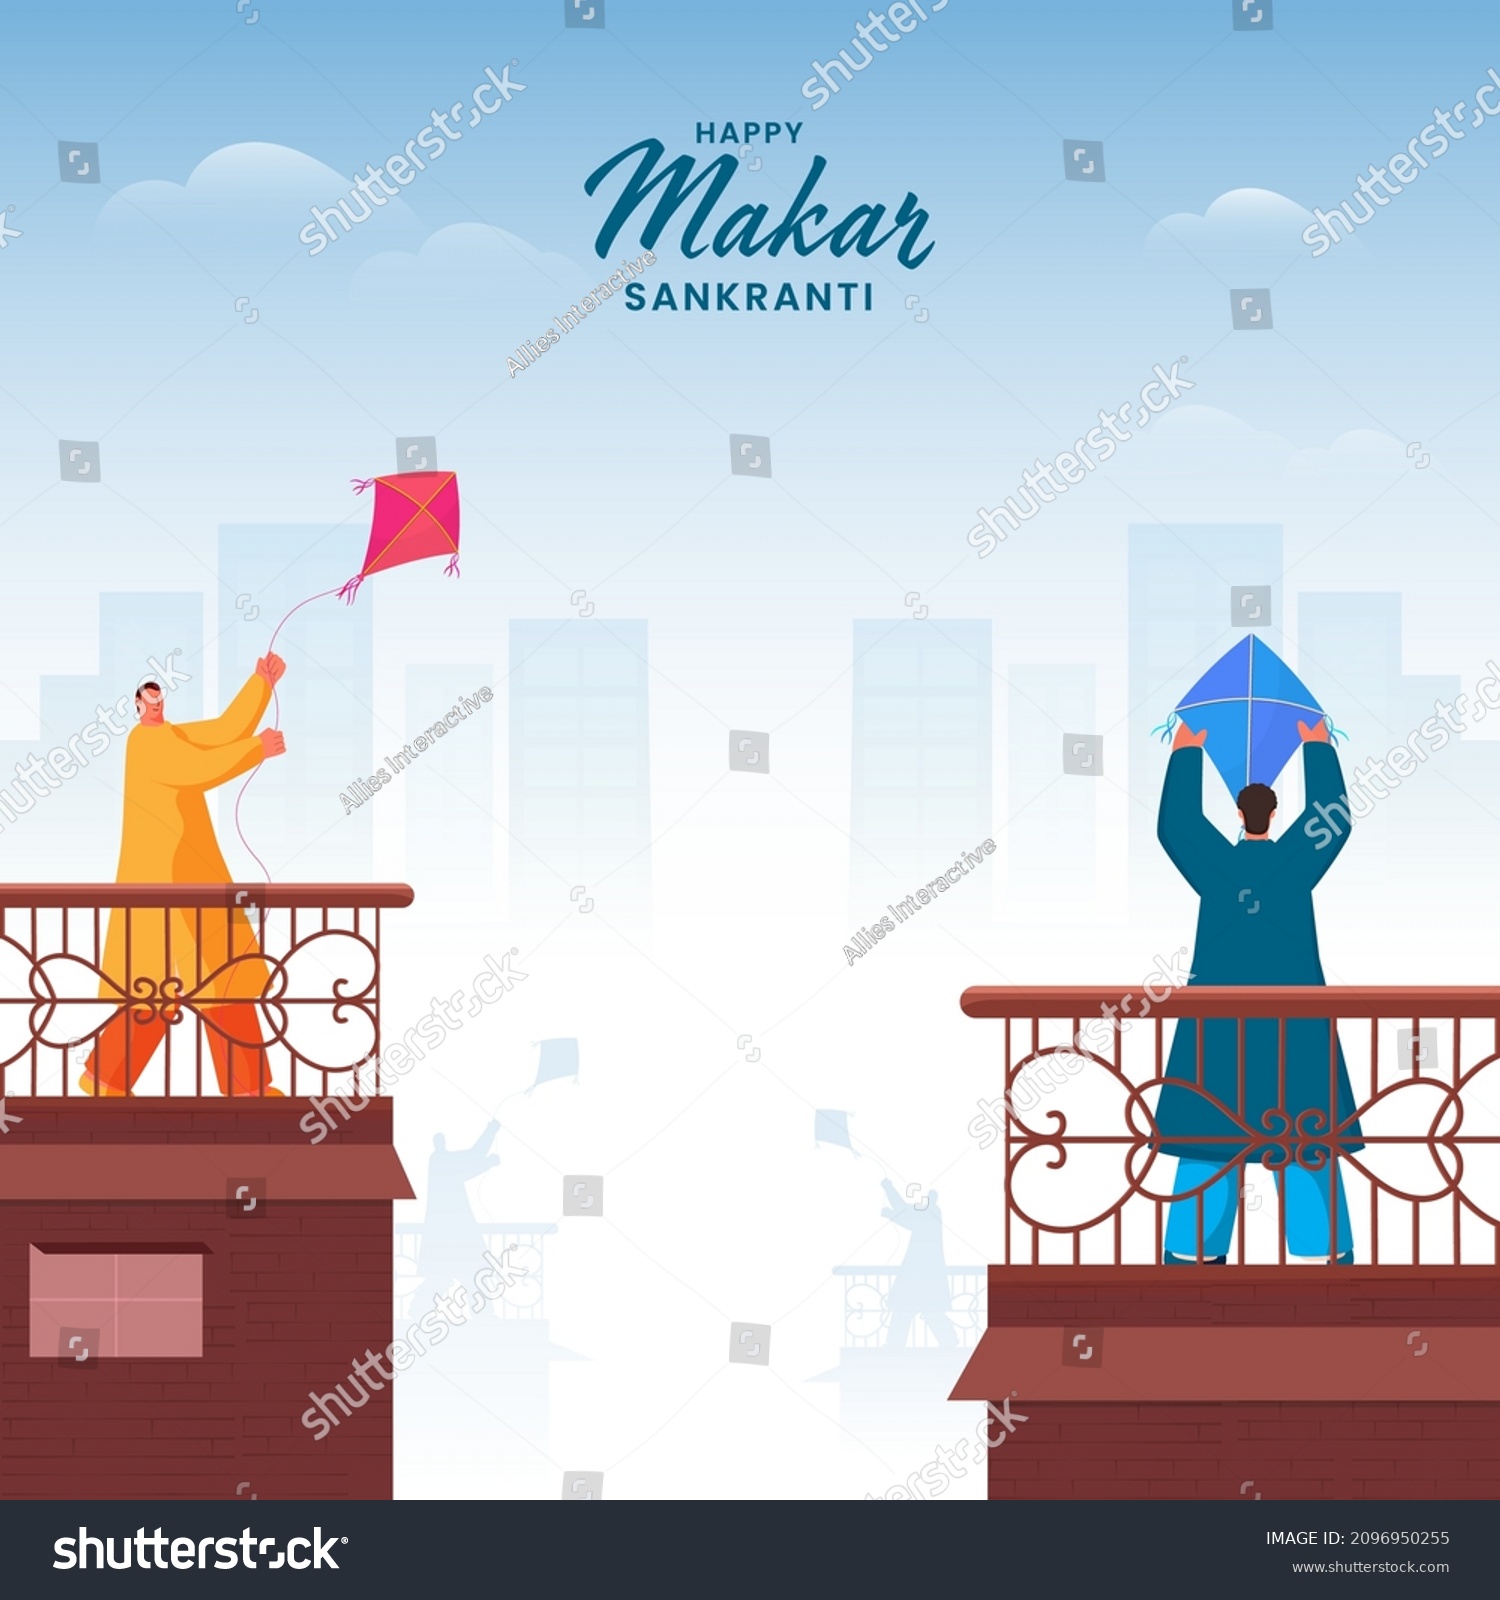 SVG of Happy Makar Sankranti Celebration Background With Cartoon Men Flying Kites On Their Roof. svg